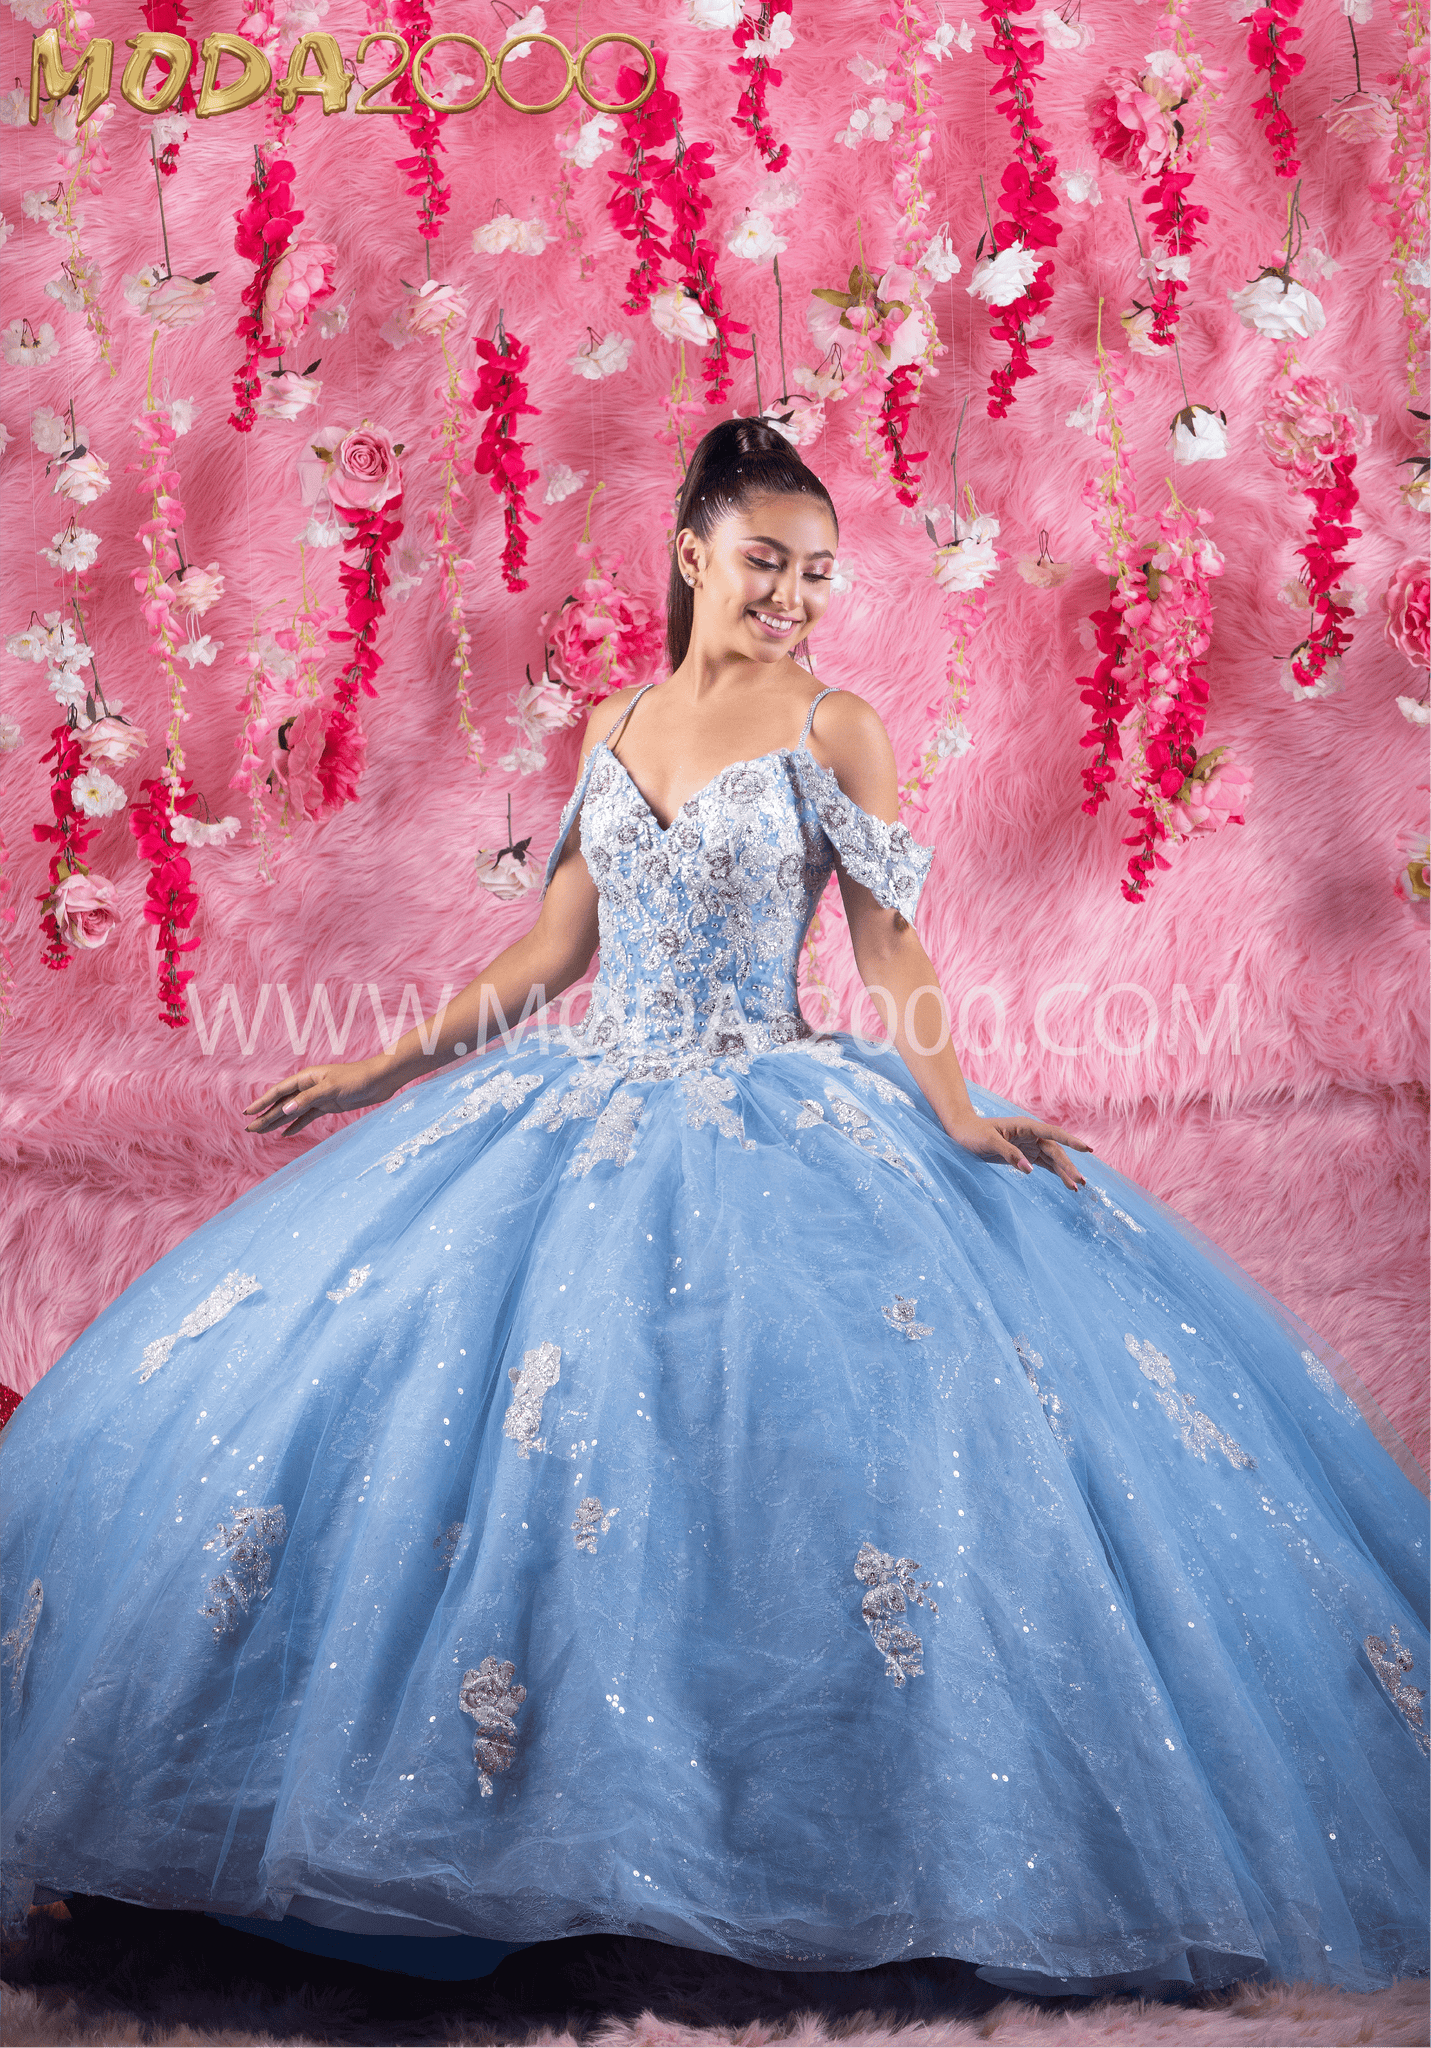 M2K9587  Crystal Beaded Glitter Party Dress – Moda 2000 LLC